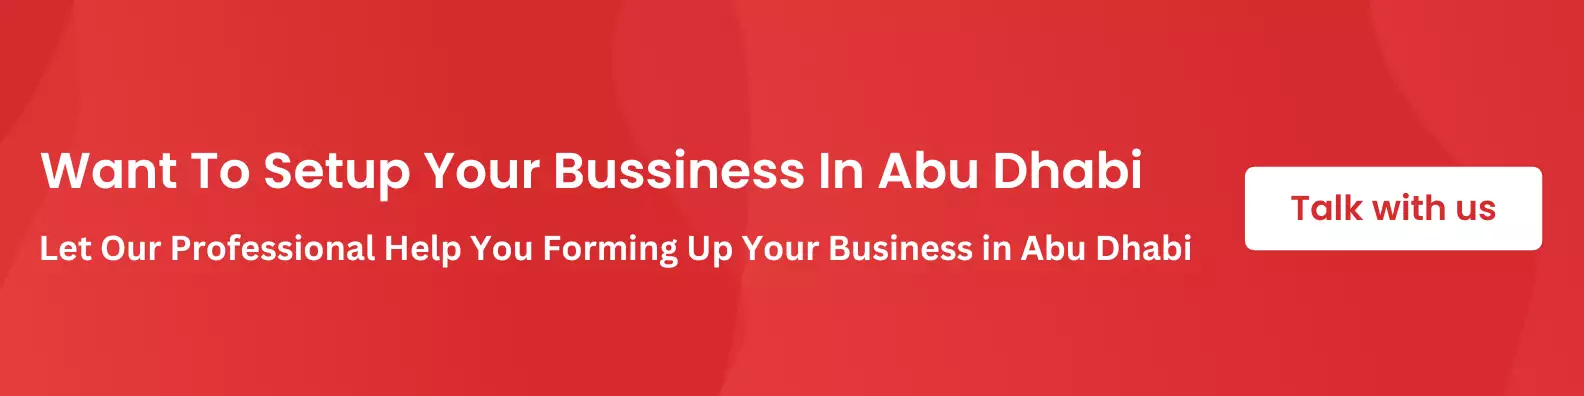 businesss-in-abu-dhabi